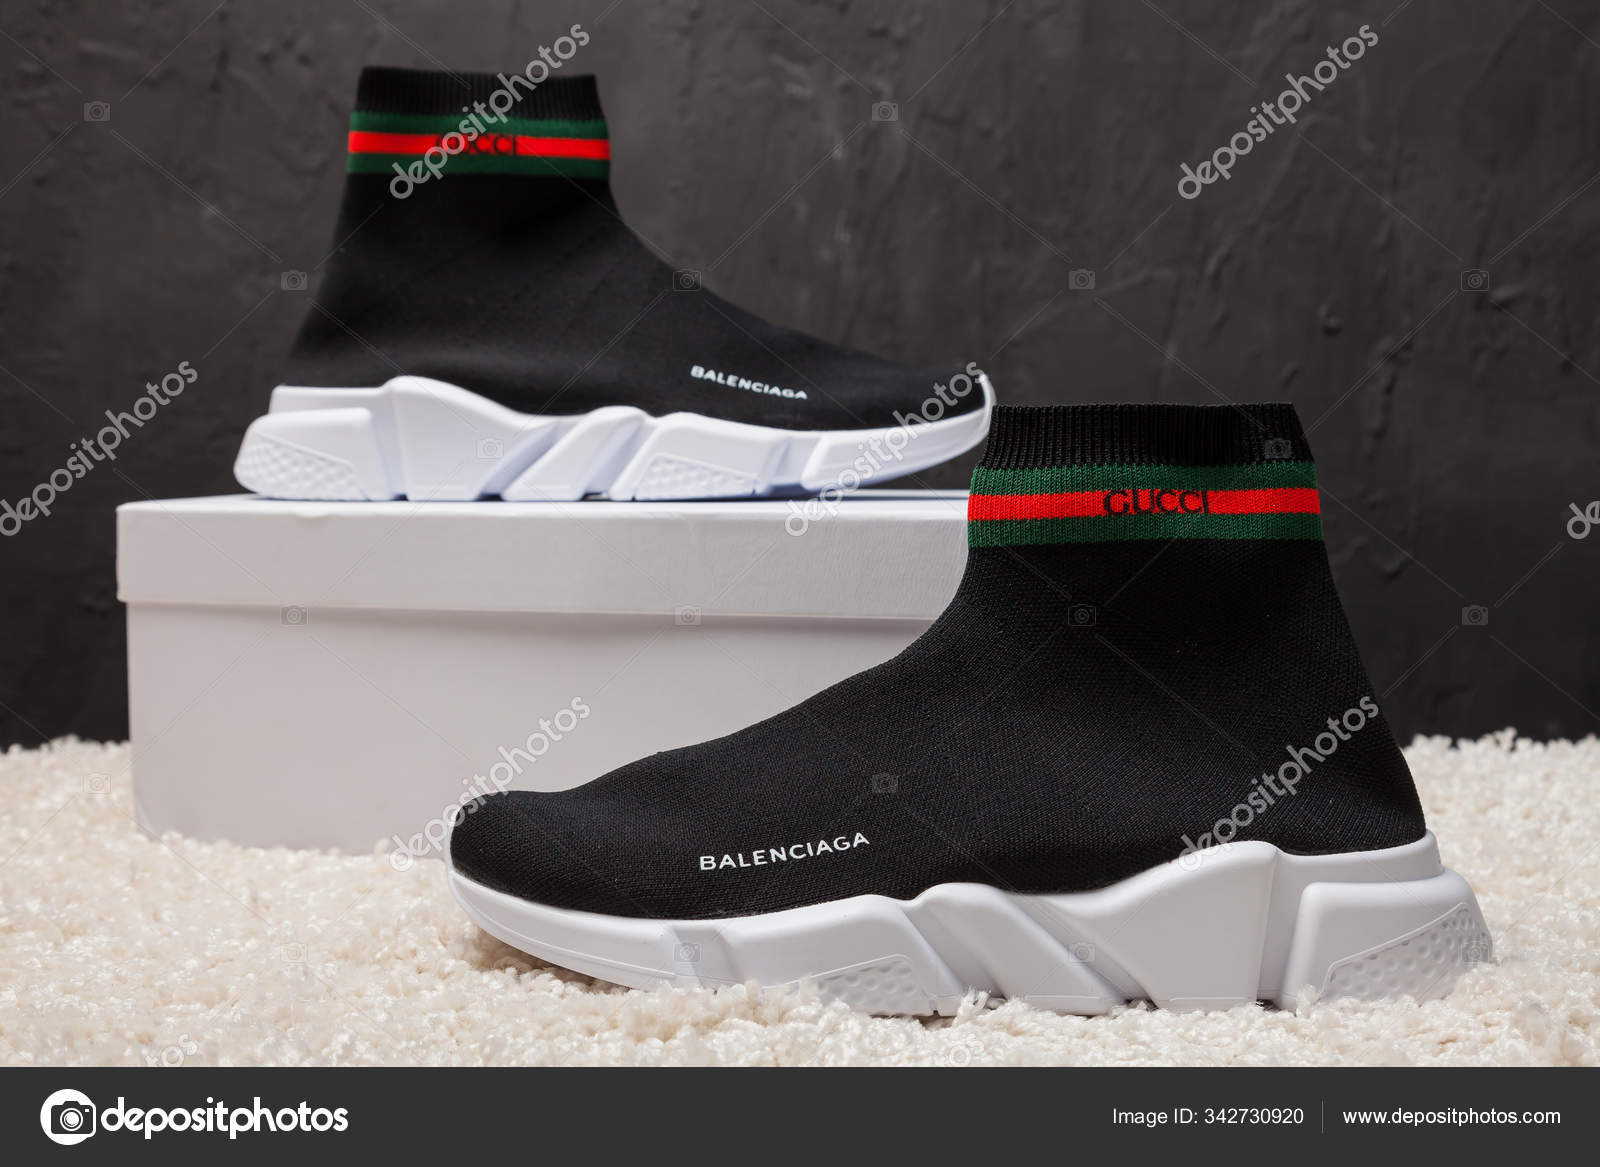 Nuevo Hermoso Colorido Agradable Balenciaga Gucci Zapatillas Correr Zapatillas Deporte — Foto de stock © sozon #342730920